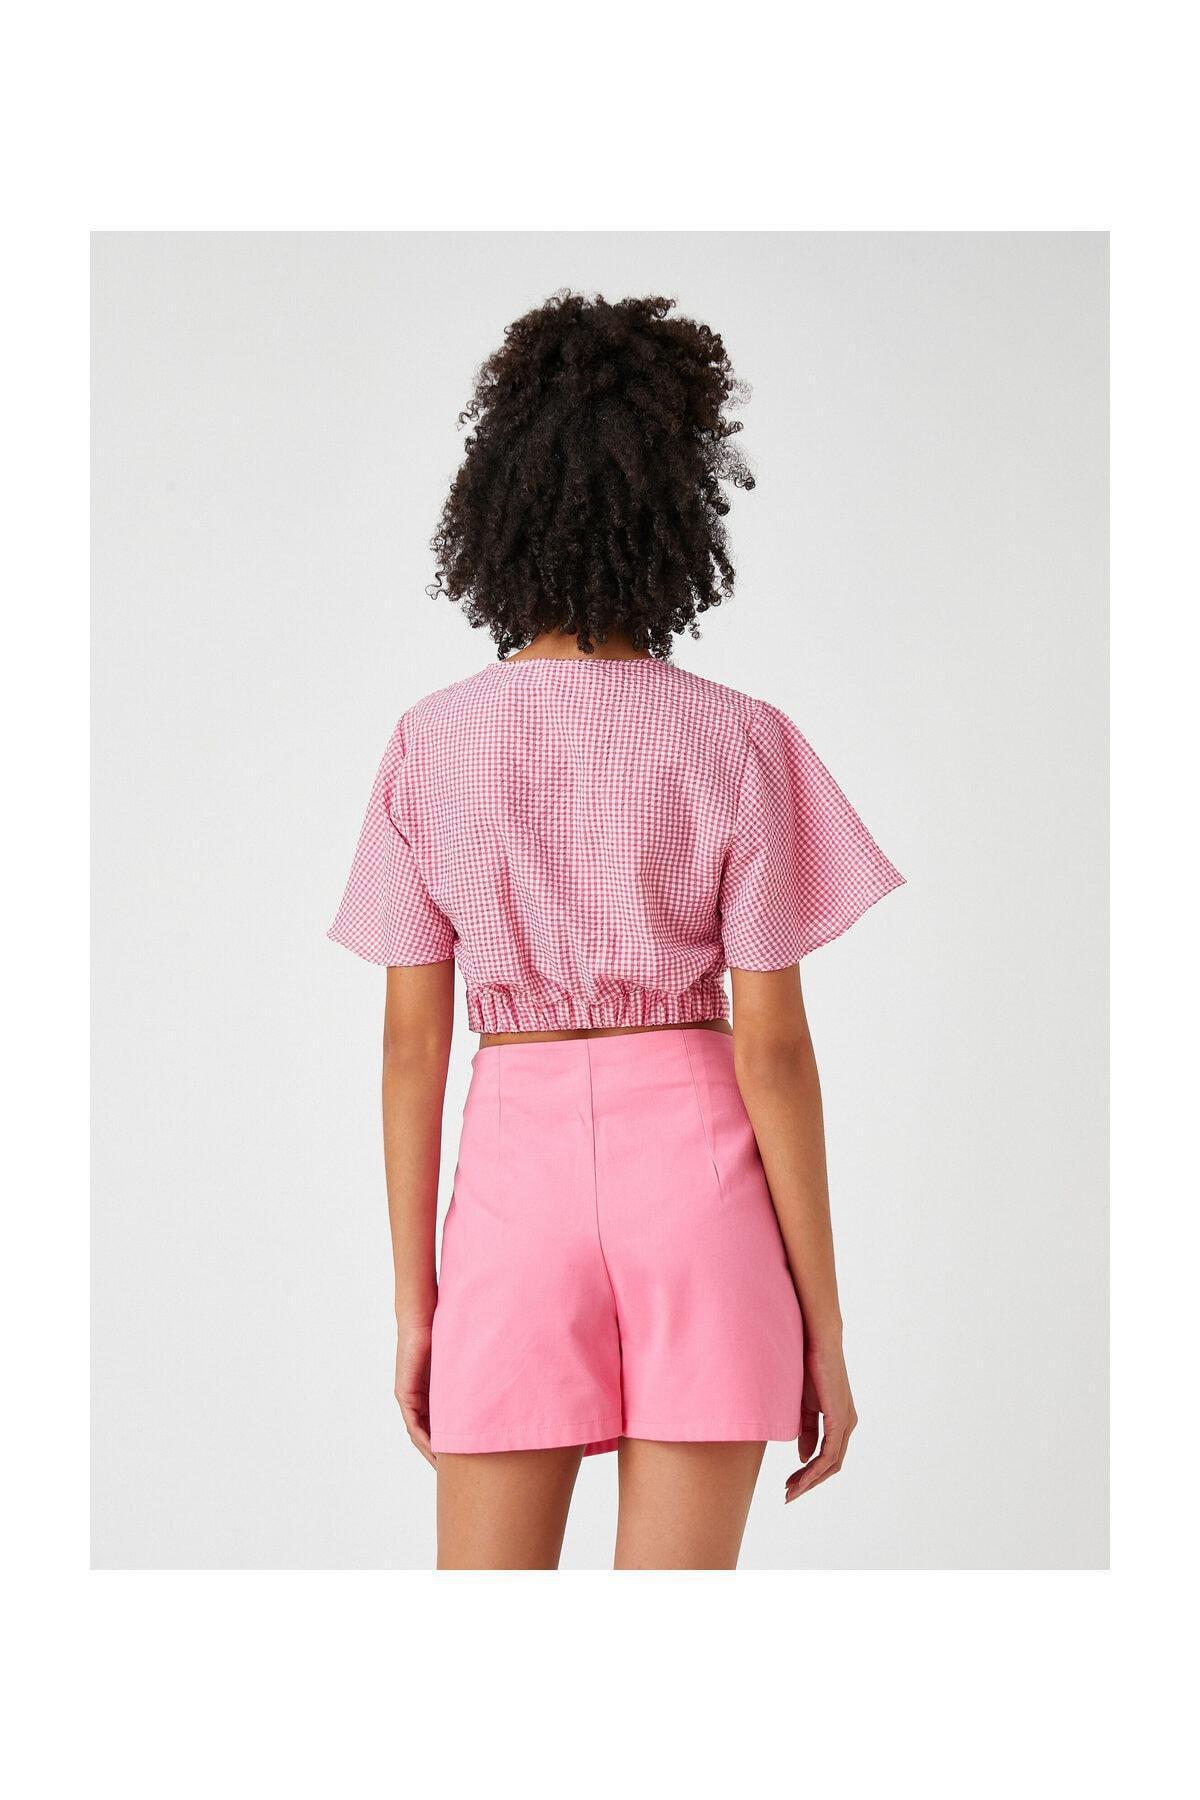 Koton - Pink Crop V-Neck Pattern Blouse